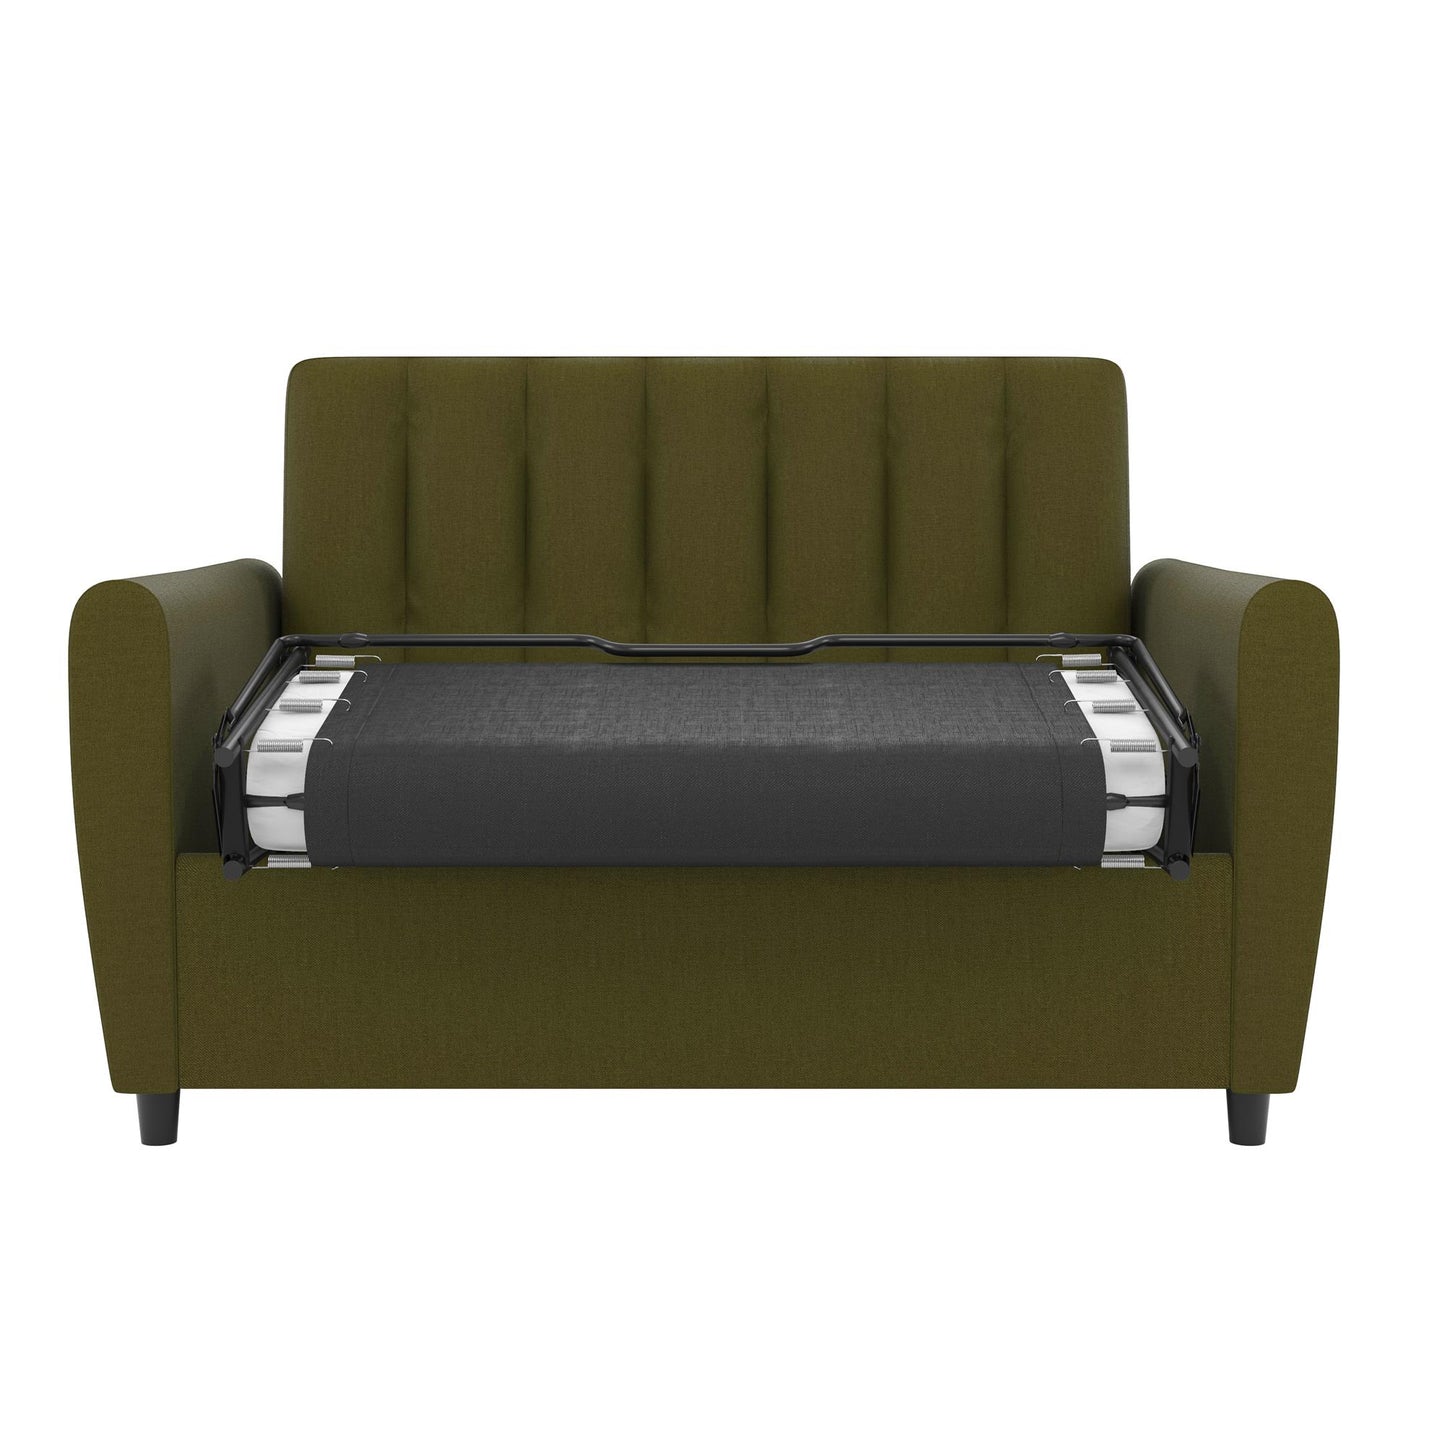 Brittany Loveseat Sleeper Sofa with Memory Foam Mattress - Green - Twin